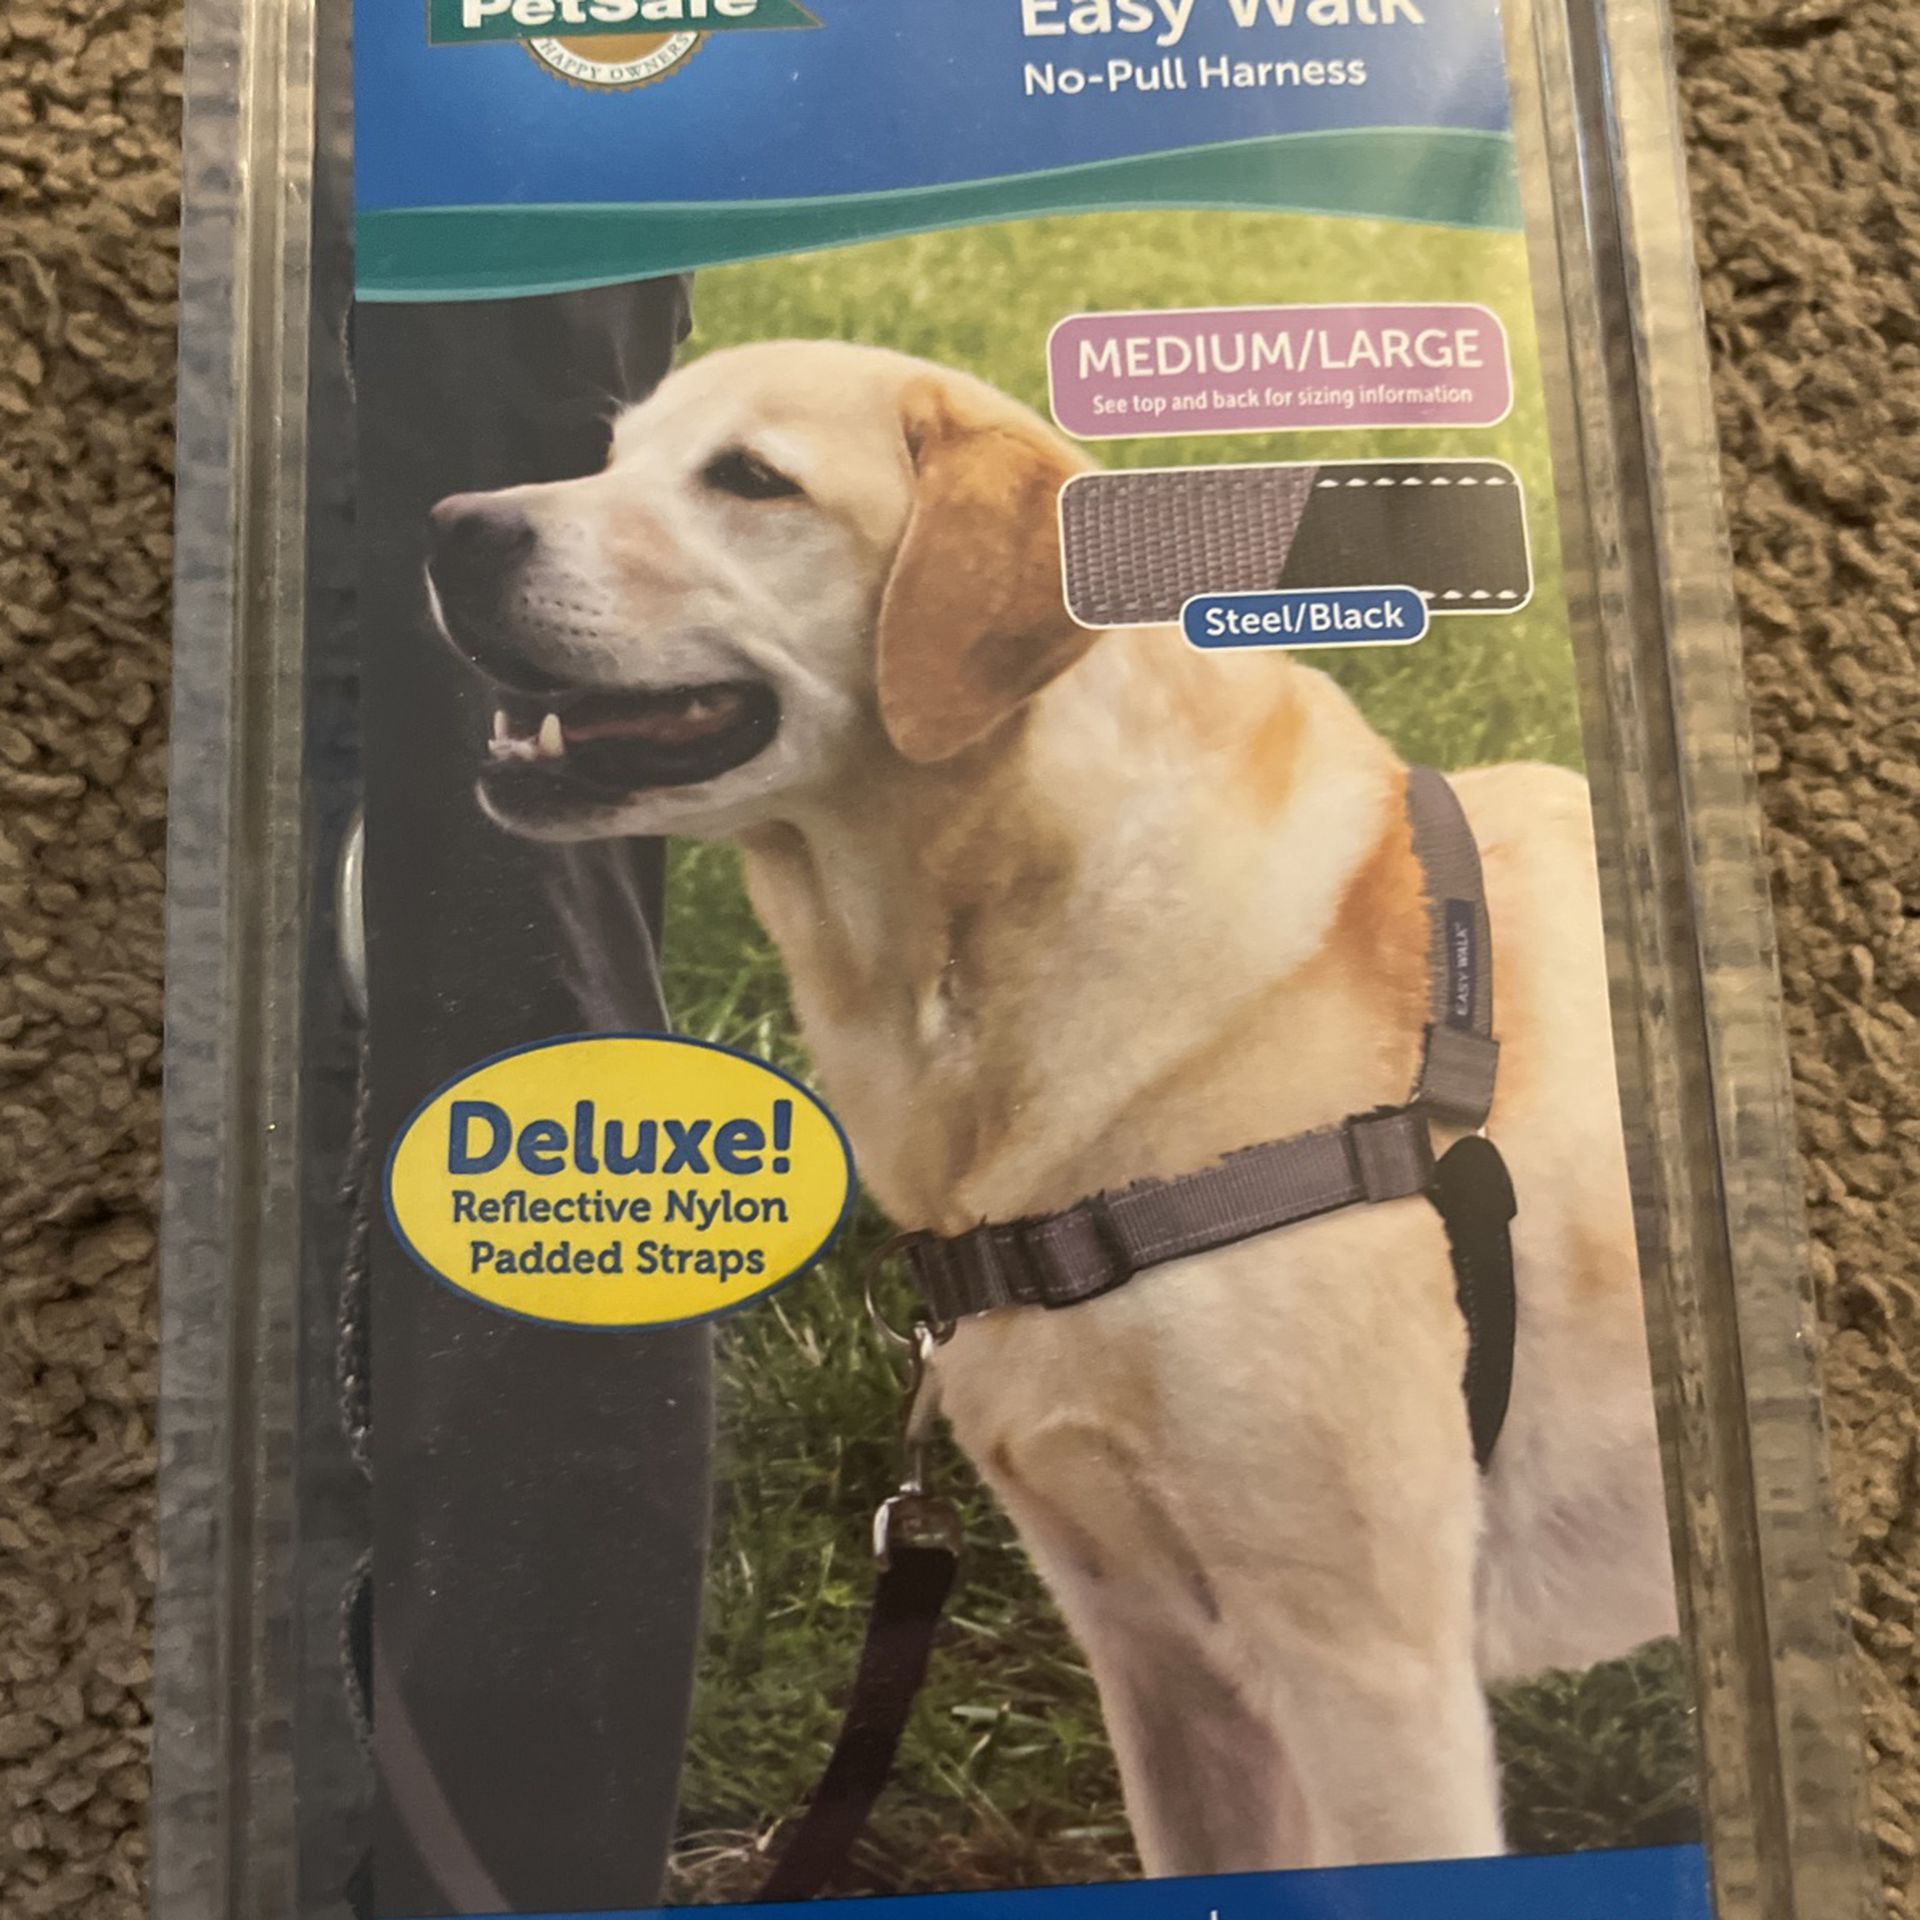 Pet safe Deluxe Dog Harness Medium/large